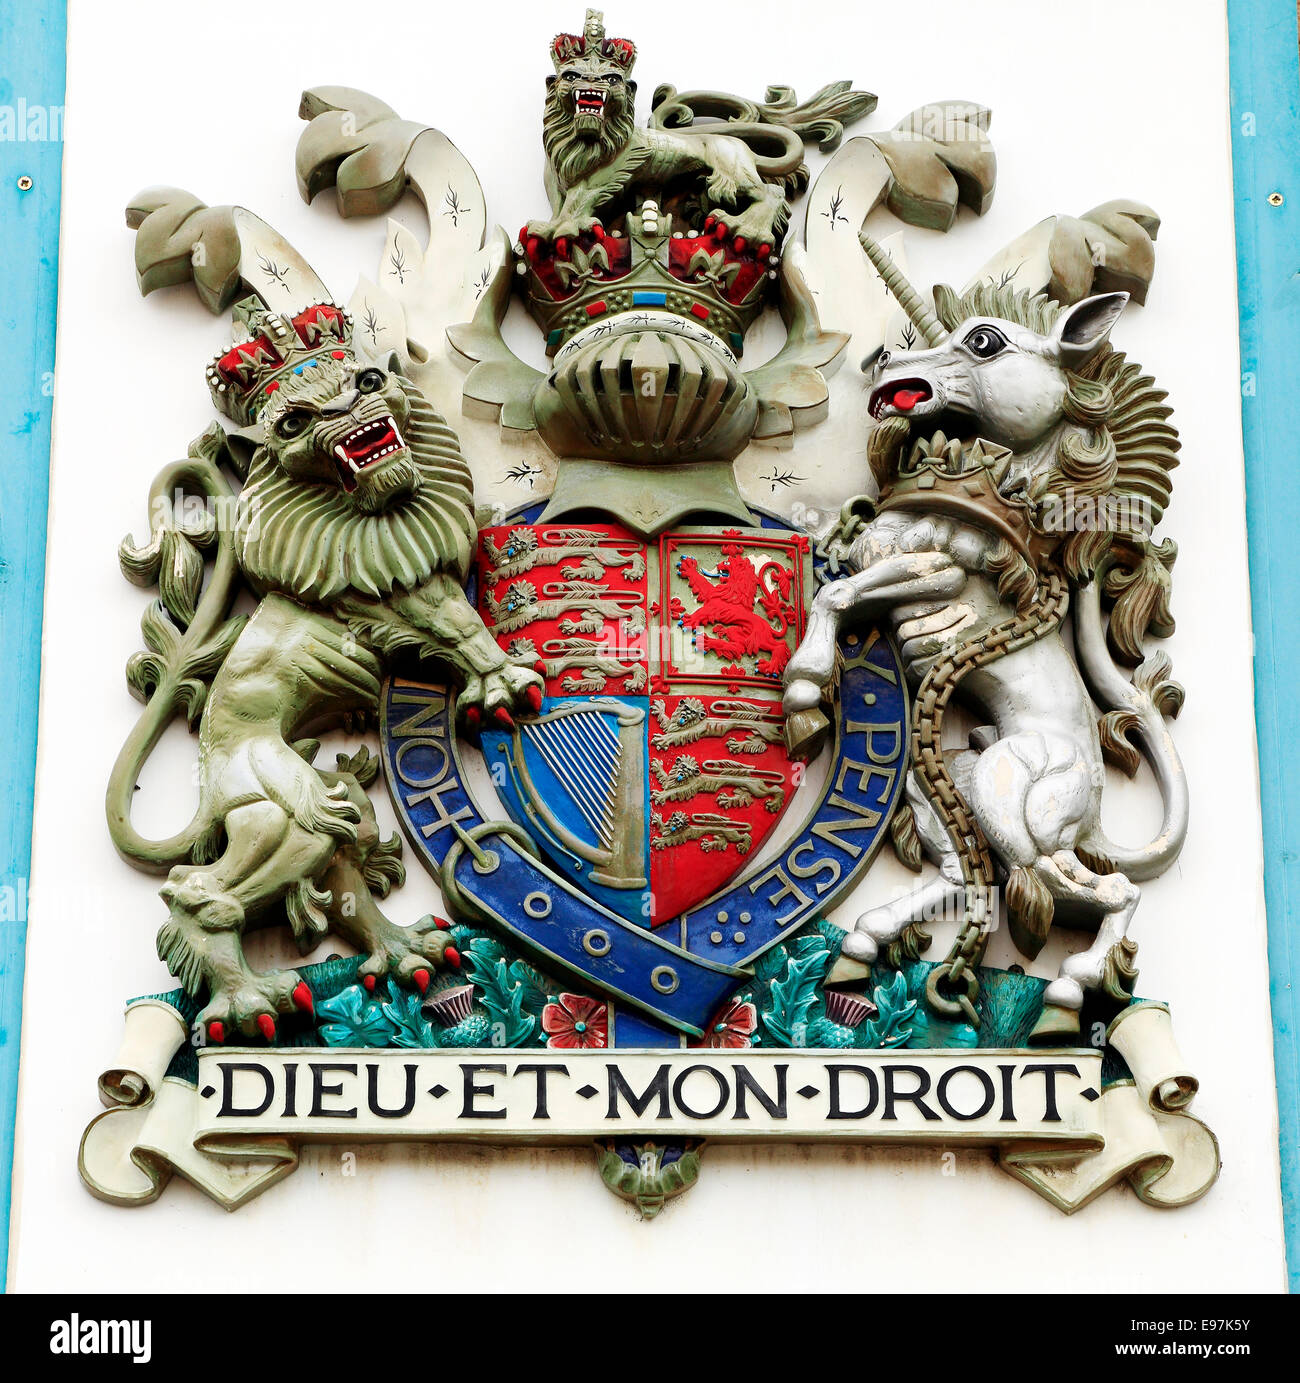 British Royal Coat of Arms, Lion and Unicorn, Dieu et Mon Droit, England UK heraldry heraldic Stock Photo